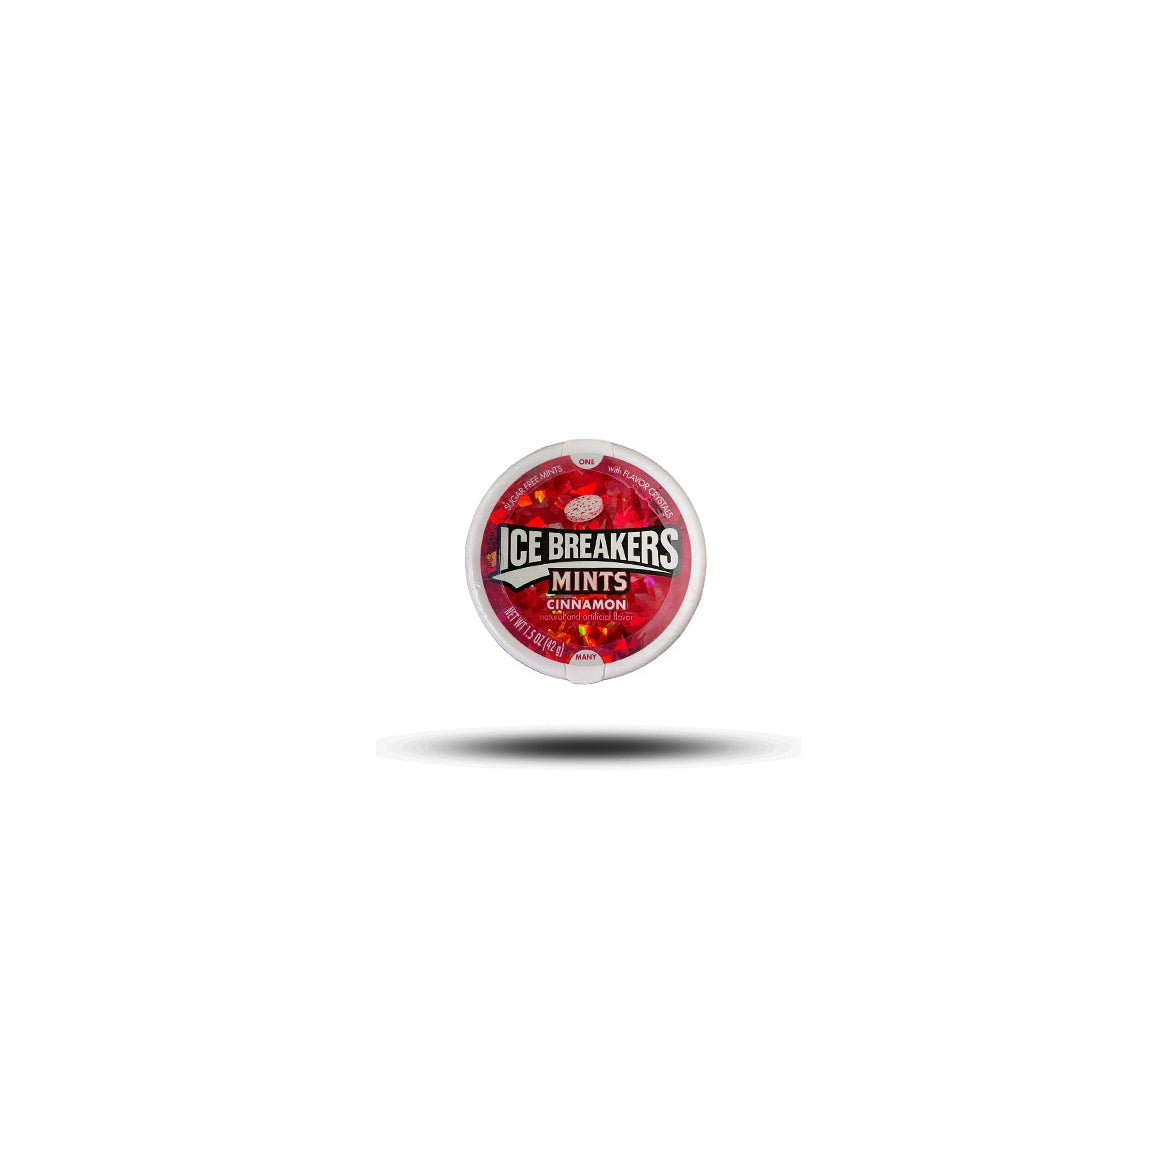 Ice Breakers Mints - Cinnamon 42g-The Hershey Company-SNACK SHOP AUSTRIA